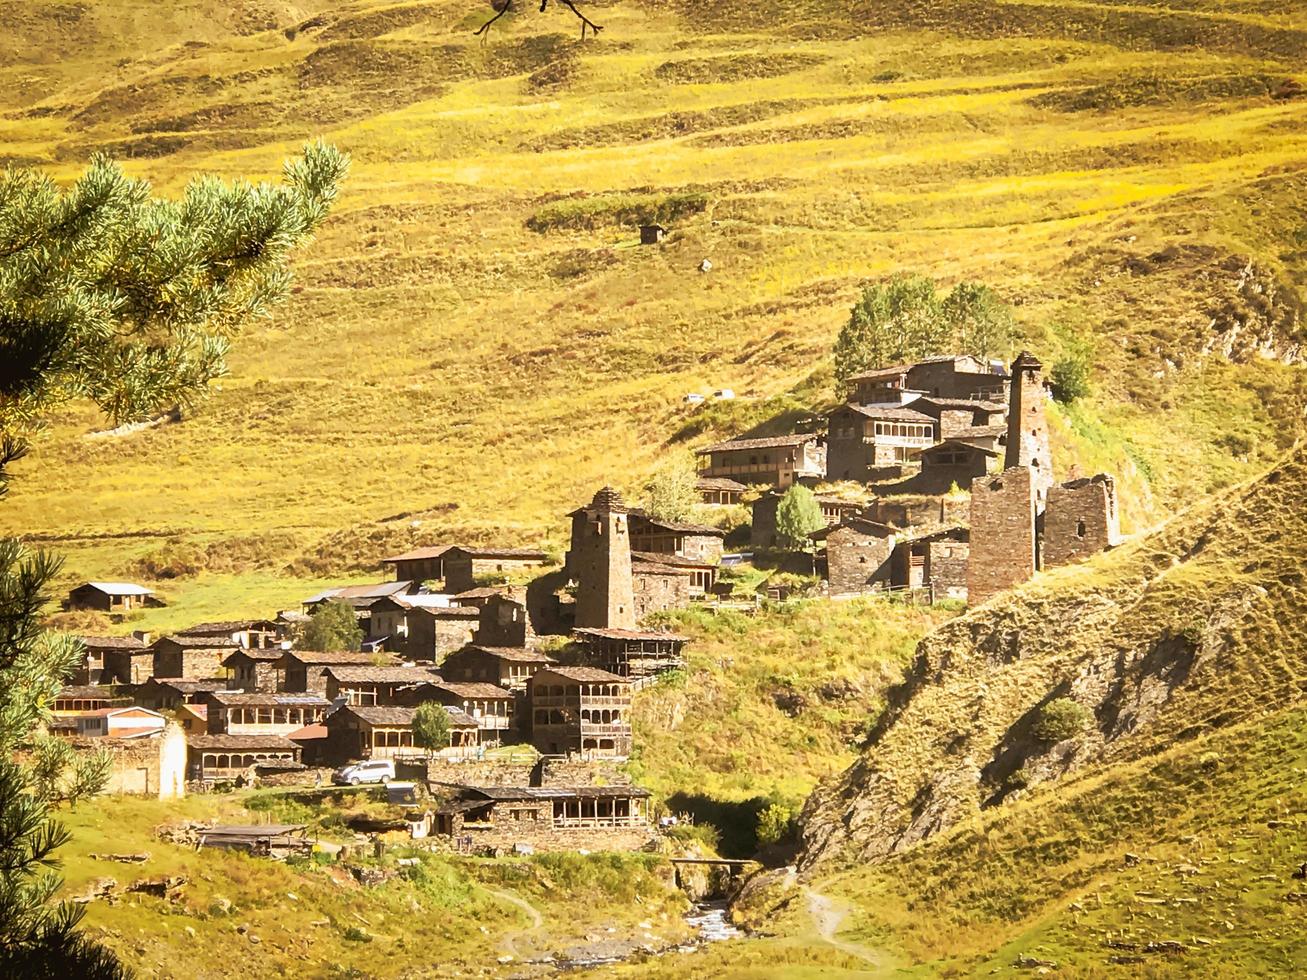 tusheti, georgia 2020-torres de piedra y casas tradicionales tusheti en dartlo village foto